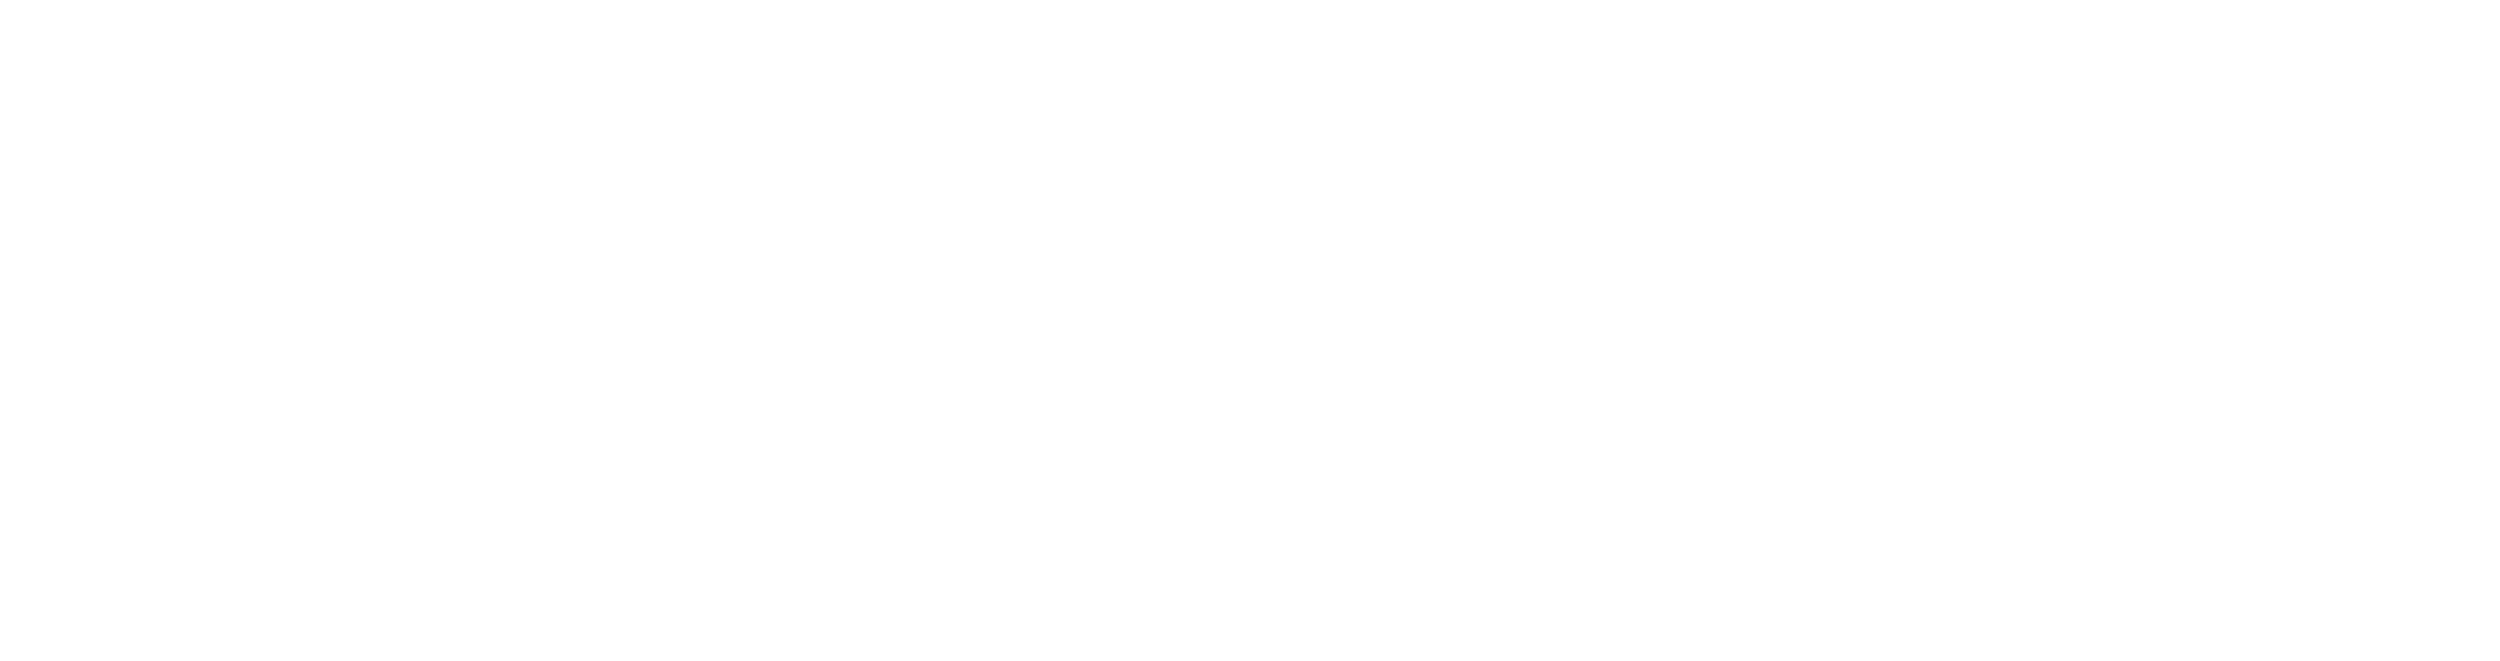 The San Diego Union-Tribune_STACK_MARKETING_WHITE.png